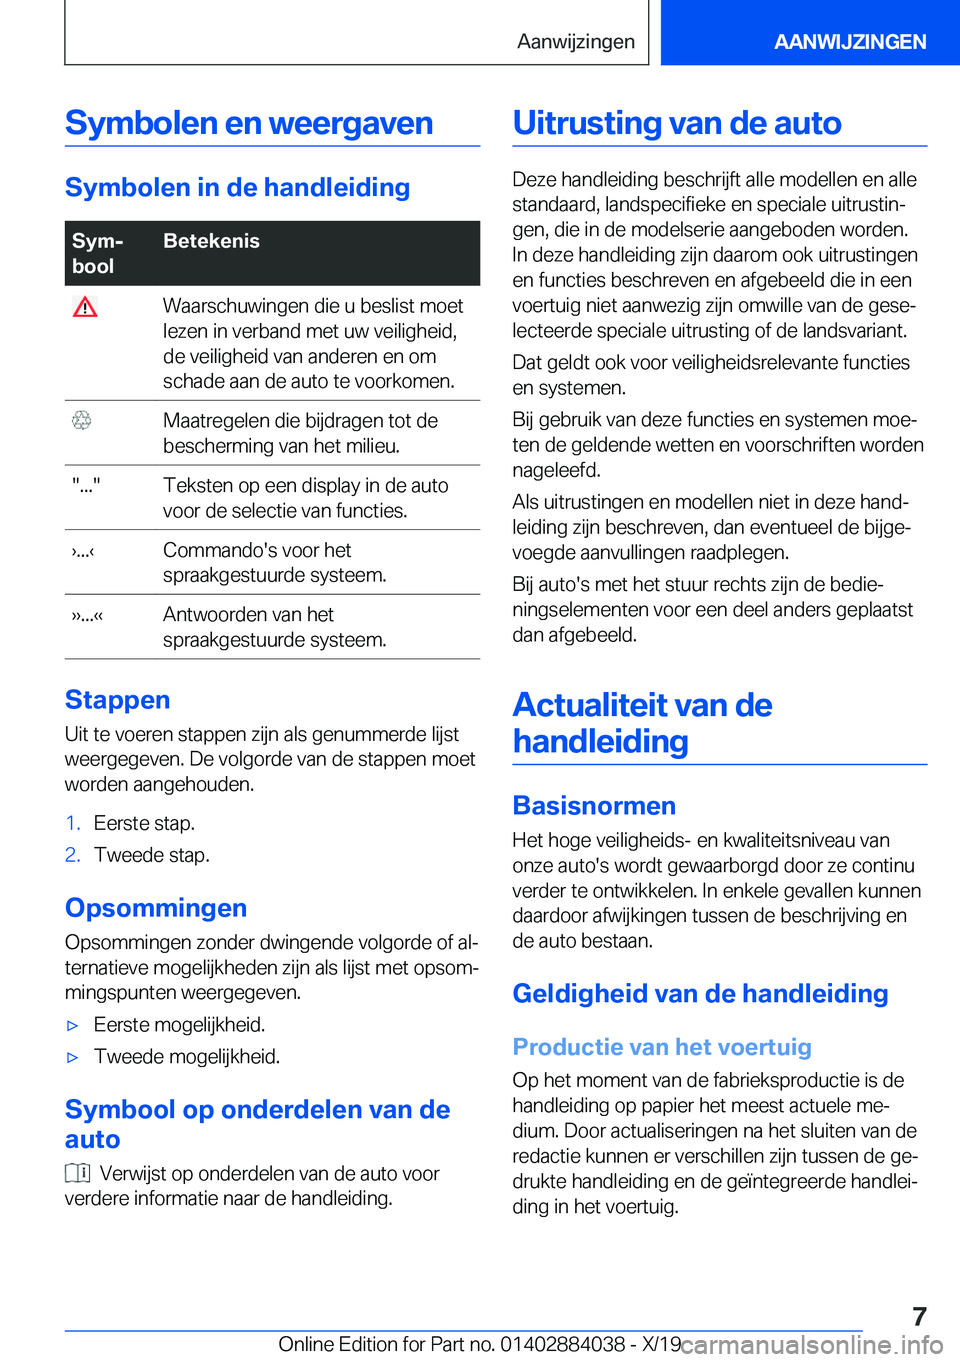 BMW 7 SERIES 2020  Instructieboekjes (in Dutch) �S�y�m�b�o�l�e�n��e�n��w�e�e�r�g�a�v�e�n
�S�y�m�b�o�l�e�n��i�n��d�e��h�a�n�d�l�e�i�d�i�n�g
�S�y�mj
�b�o�o�l�B�e�t�e�k�e�n�i�s��W�a�a�r�s�c�h�u�w�i�n�g�e�n��d�i�e��u��b�e�s�l�i�s�t��m�o�e�t
